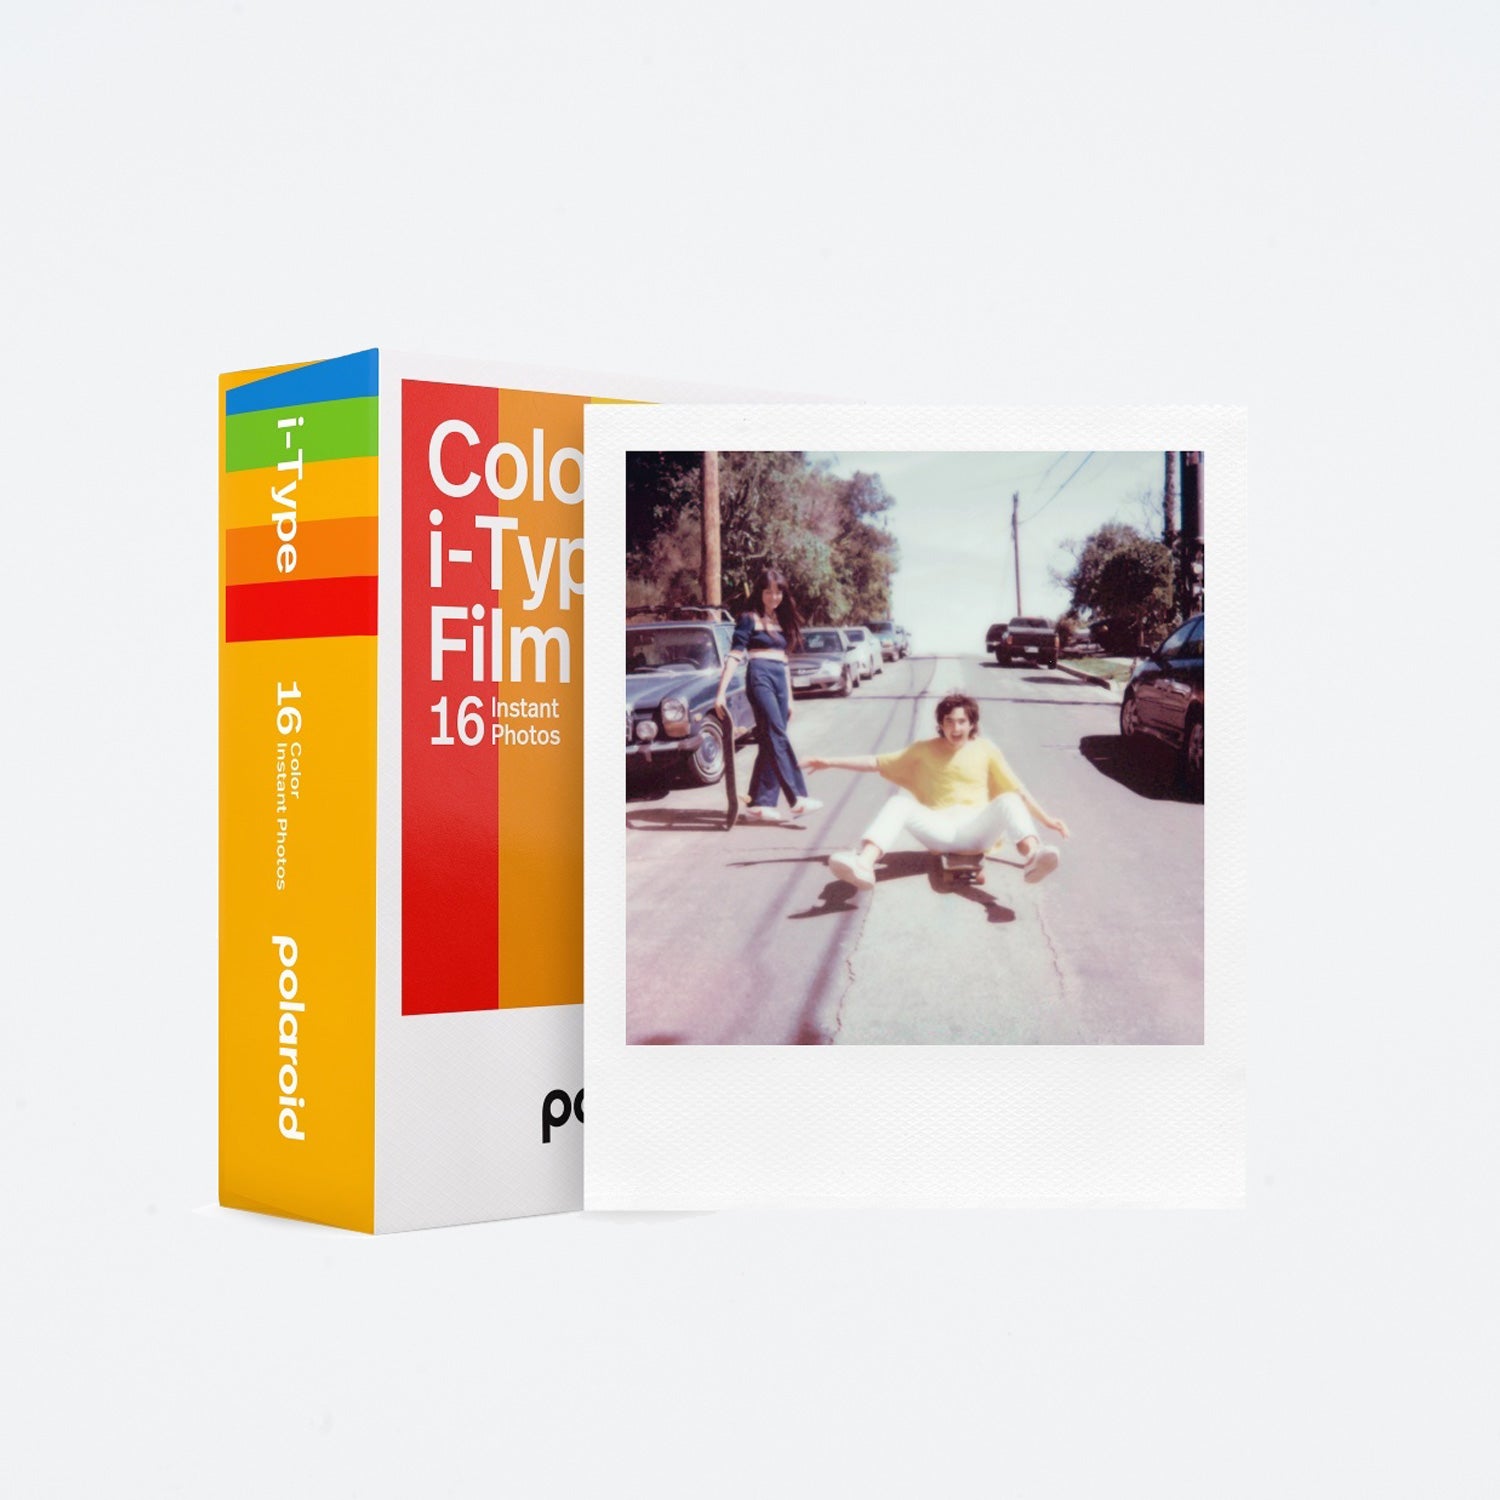 Polaroid i-Type Color Film 2 Pack